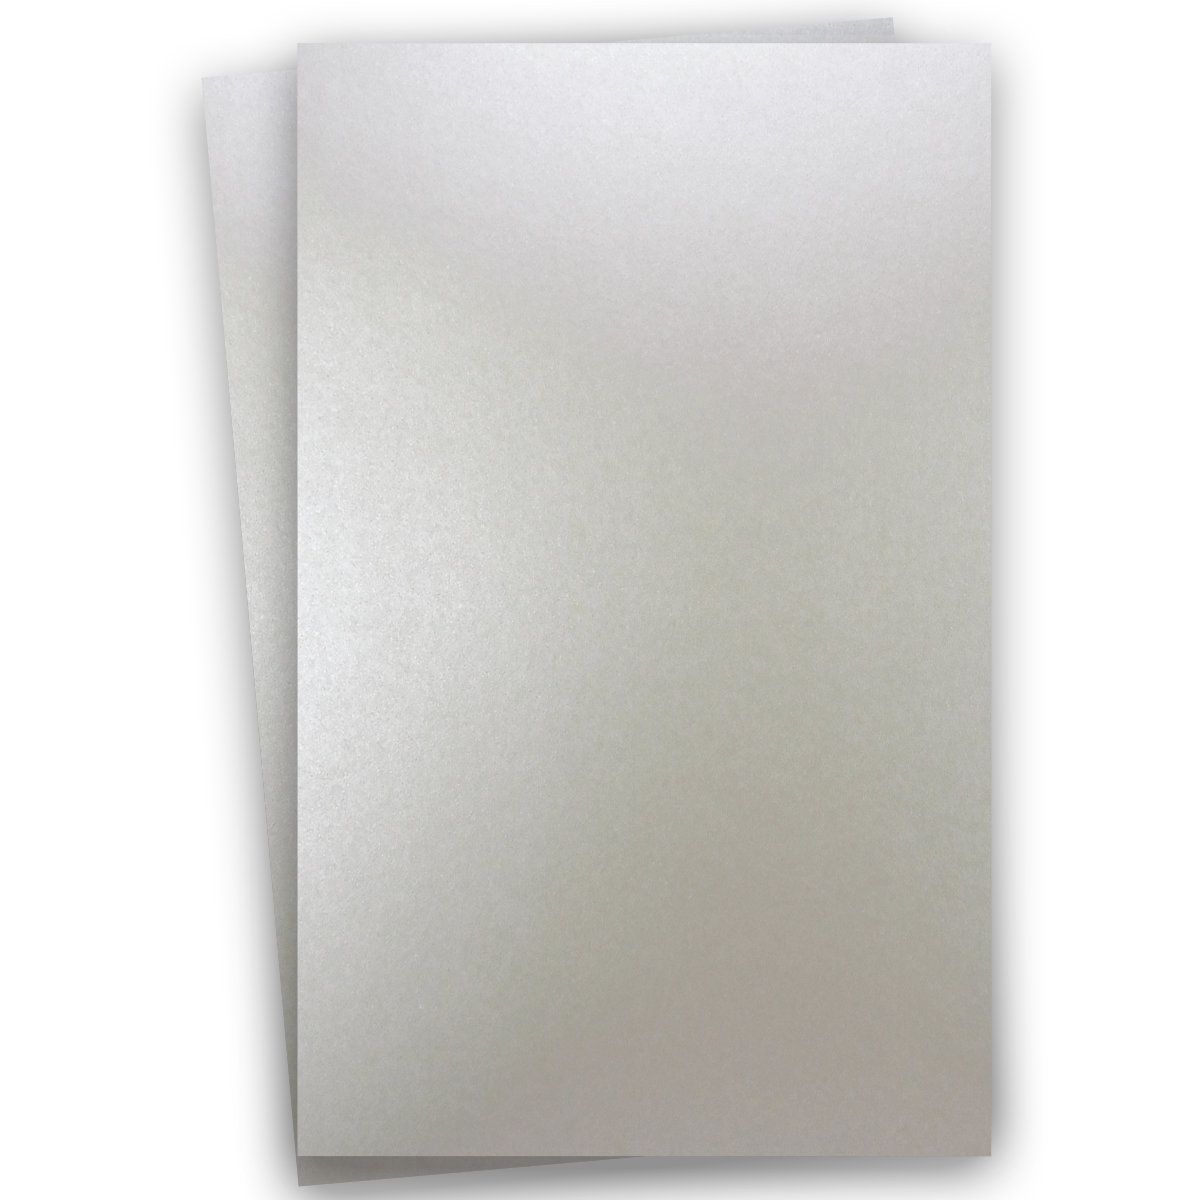 Shine ONYX - Shimmer Metallic Card Stock Paper - 8.5 x 11 - 107lb